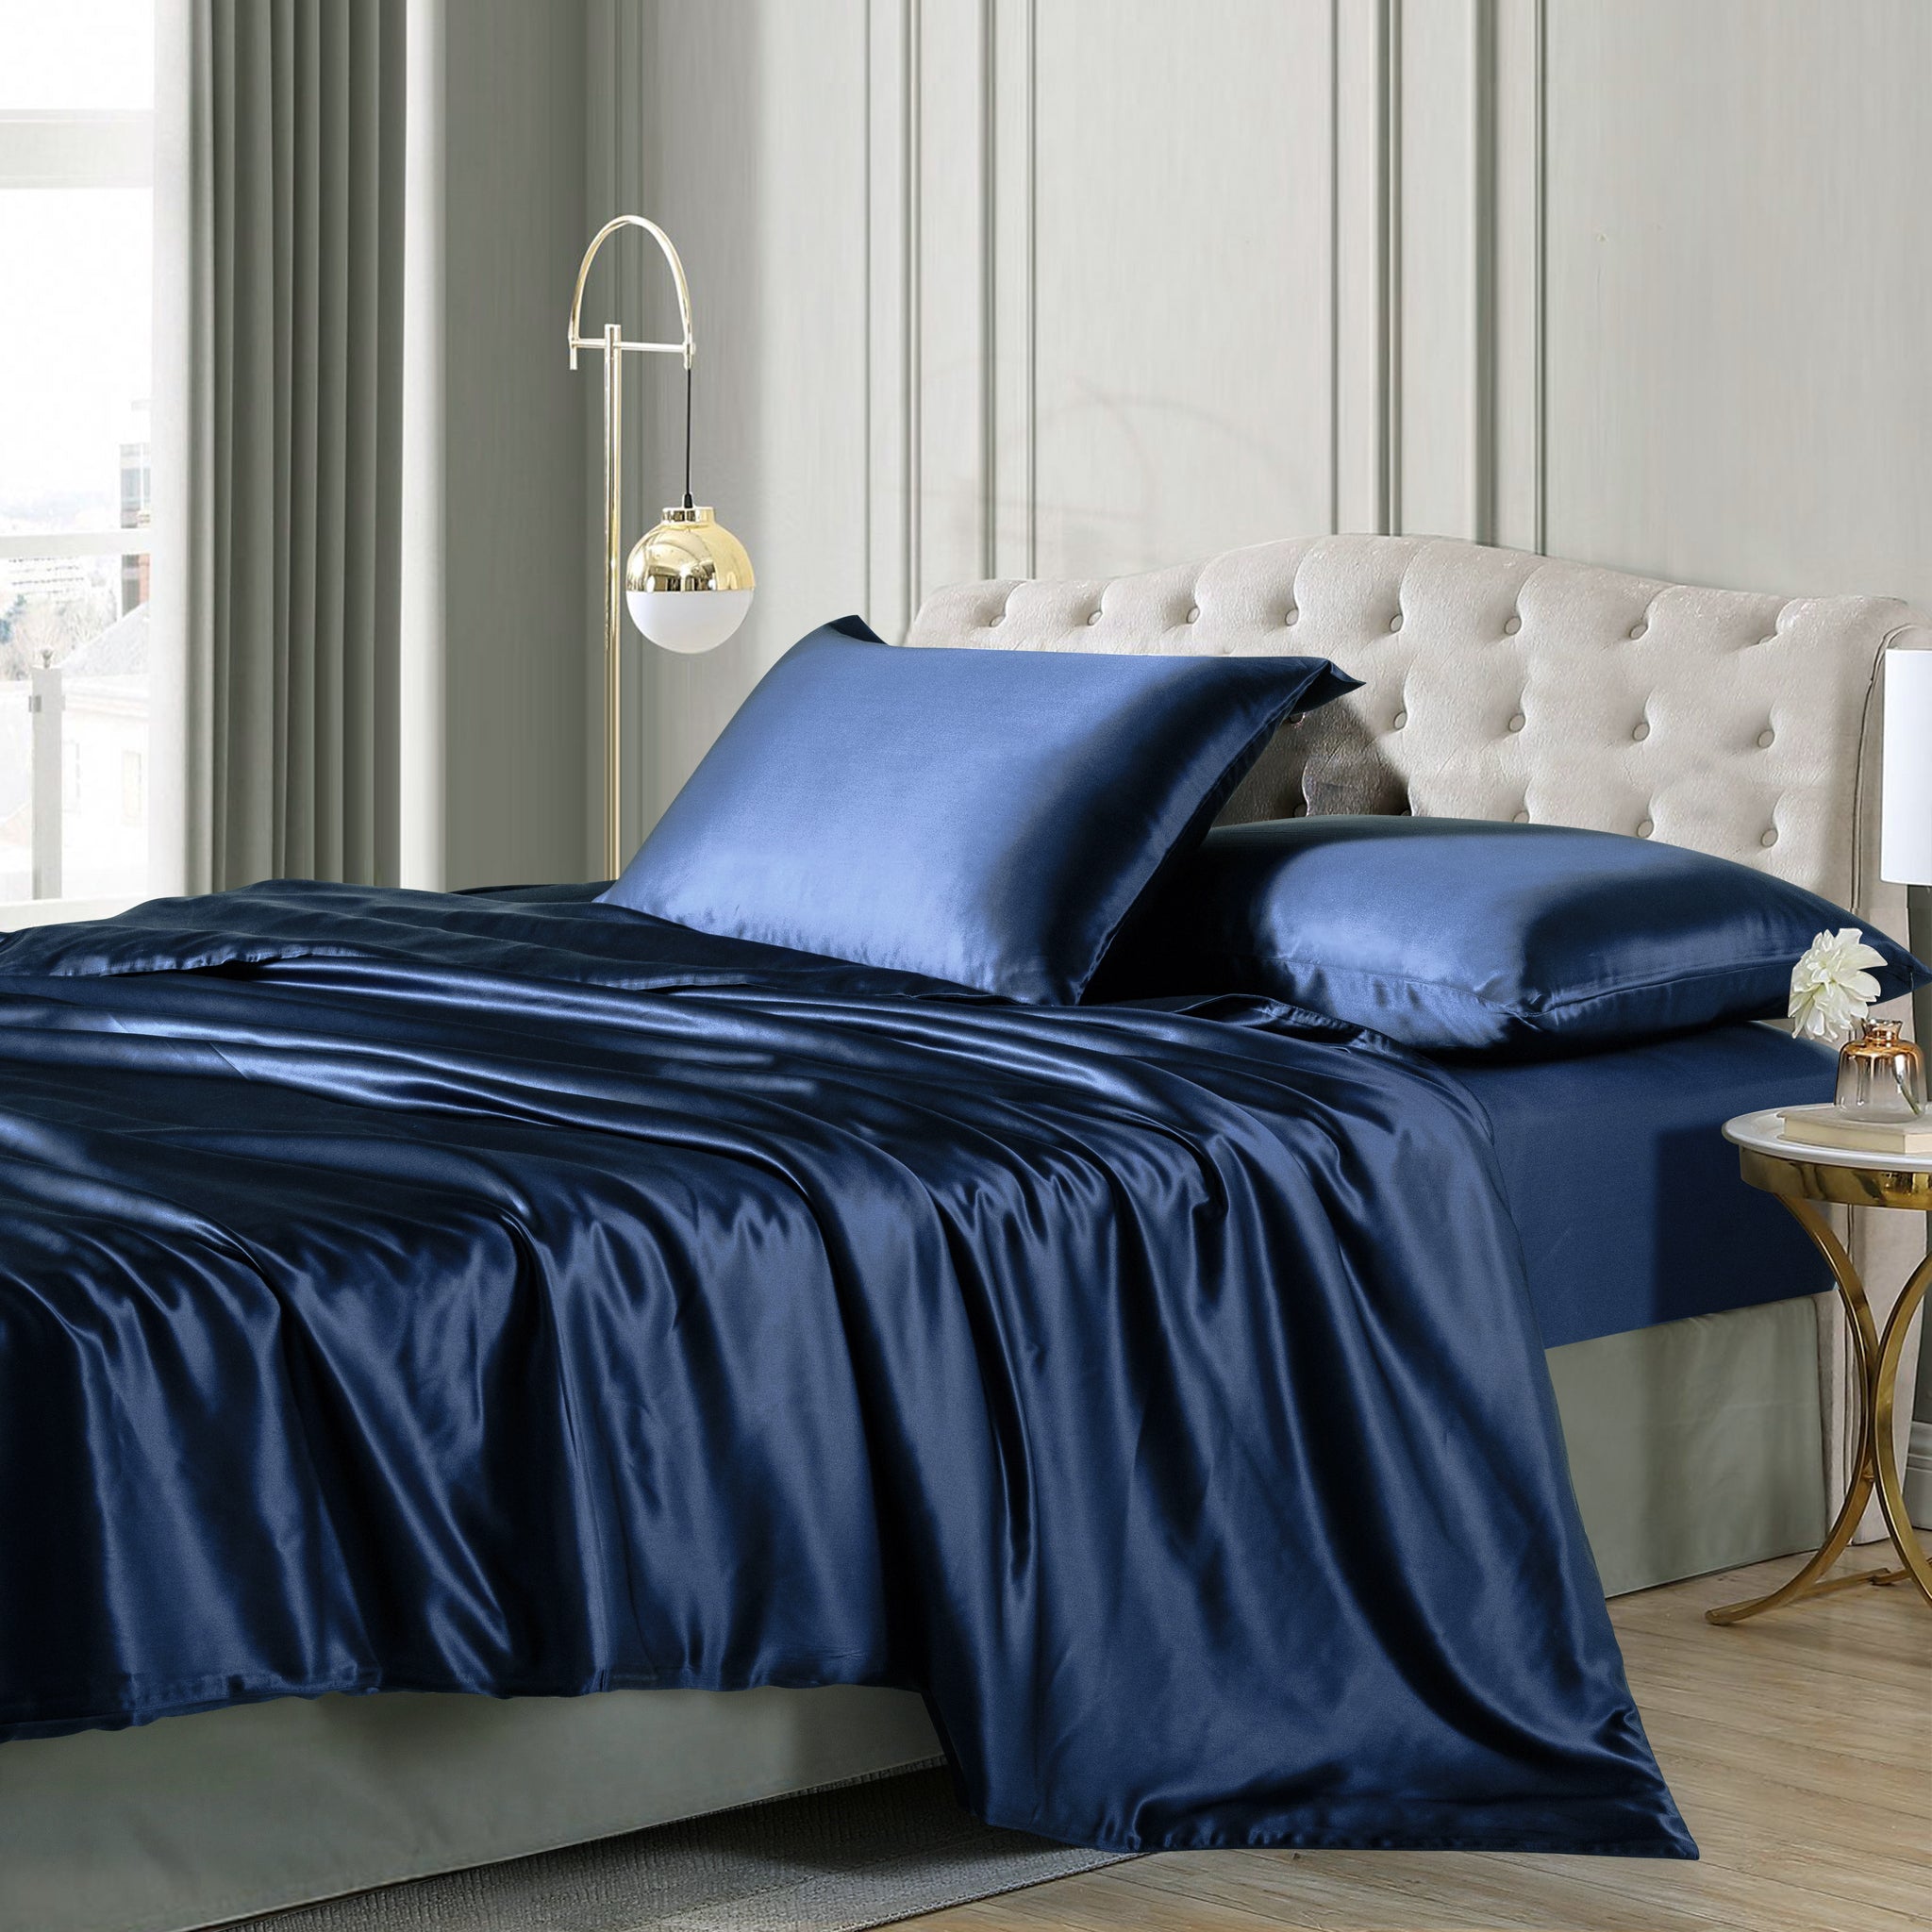 Bedding Silk - Silk Duvet Luxury | Space Cover, The Set Pillowcases Silk